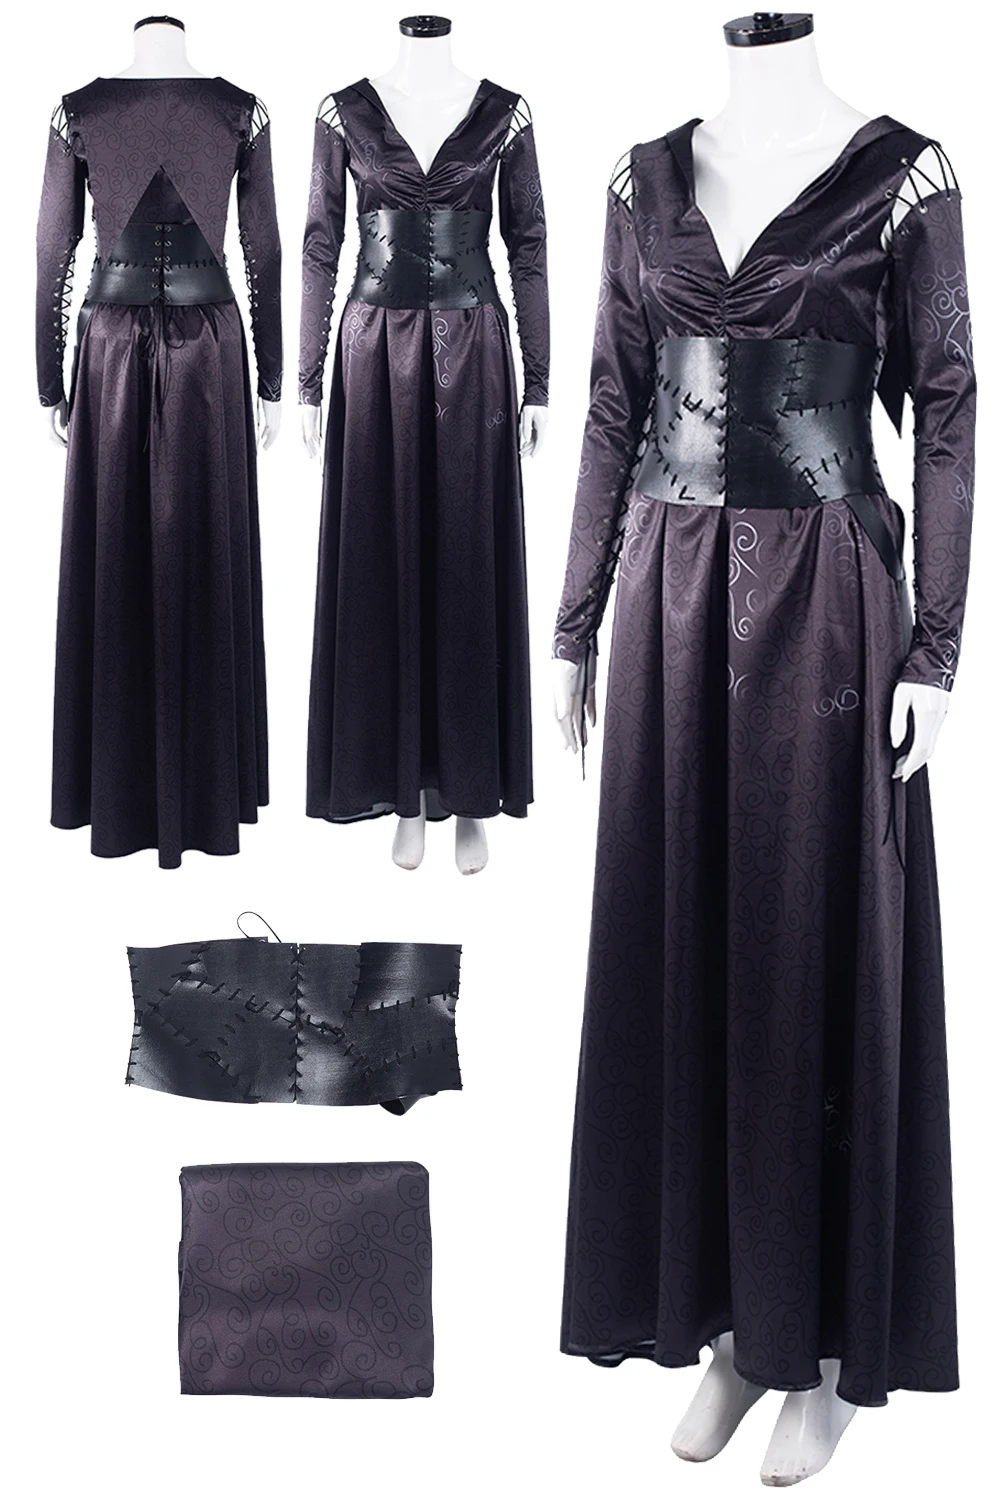 

Bella Cosplay Bellatrix Lestrange Costume Magic Movie Roleplay Fantasia Outfits Girdling Skirts Women Halloween Disguise Suit